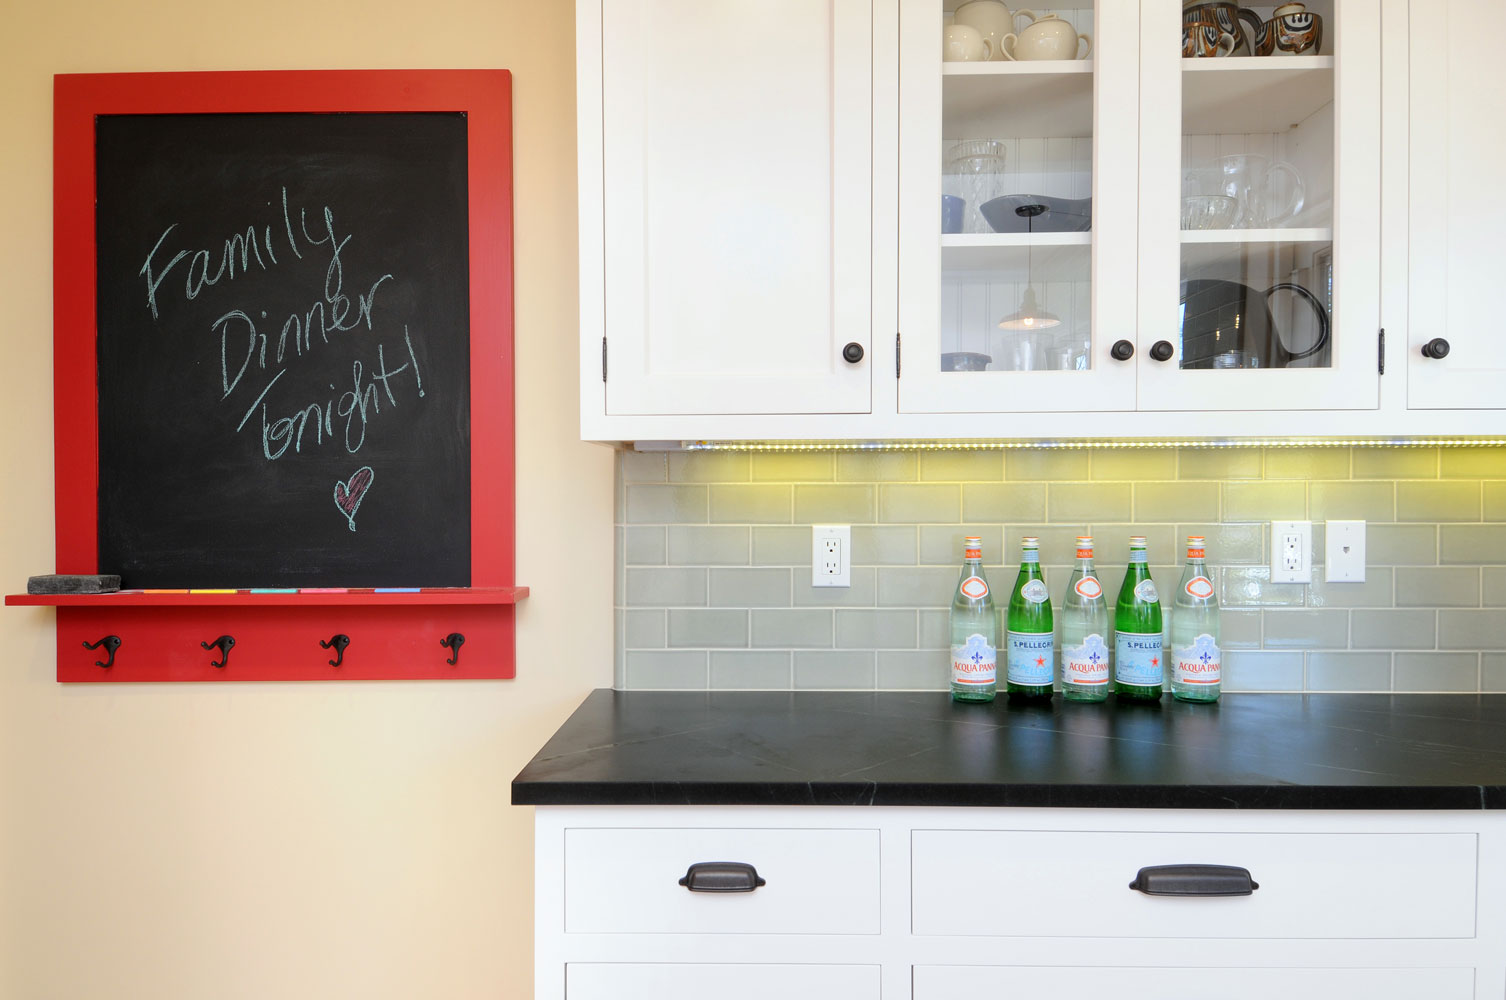 3-Waterford-kitchen-chalkboard.jpg